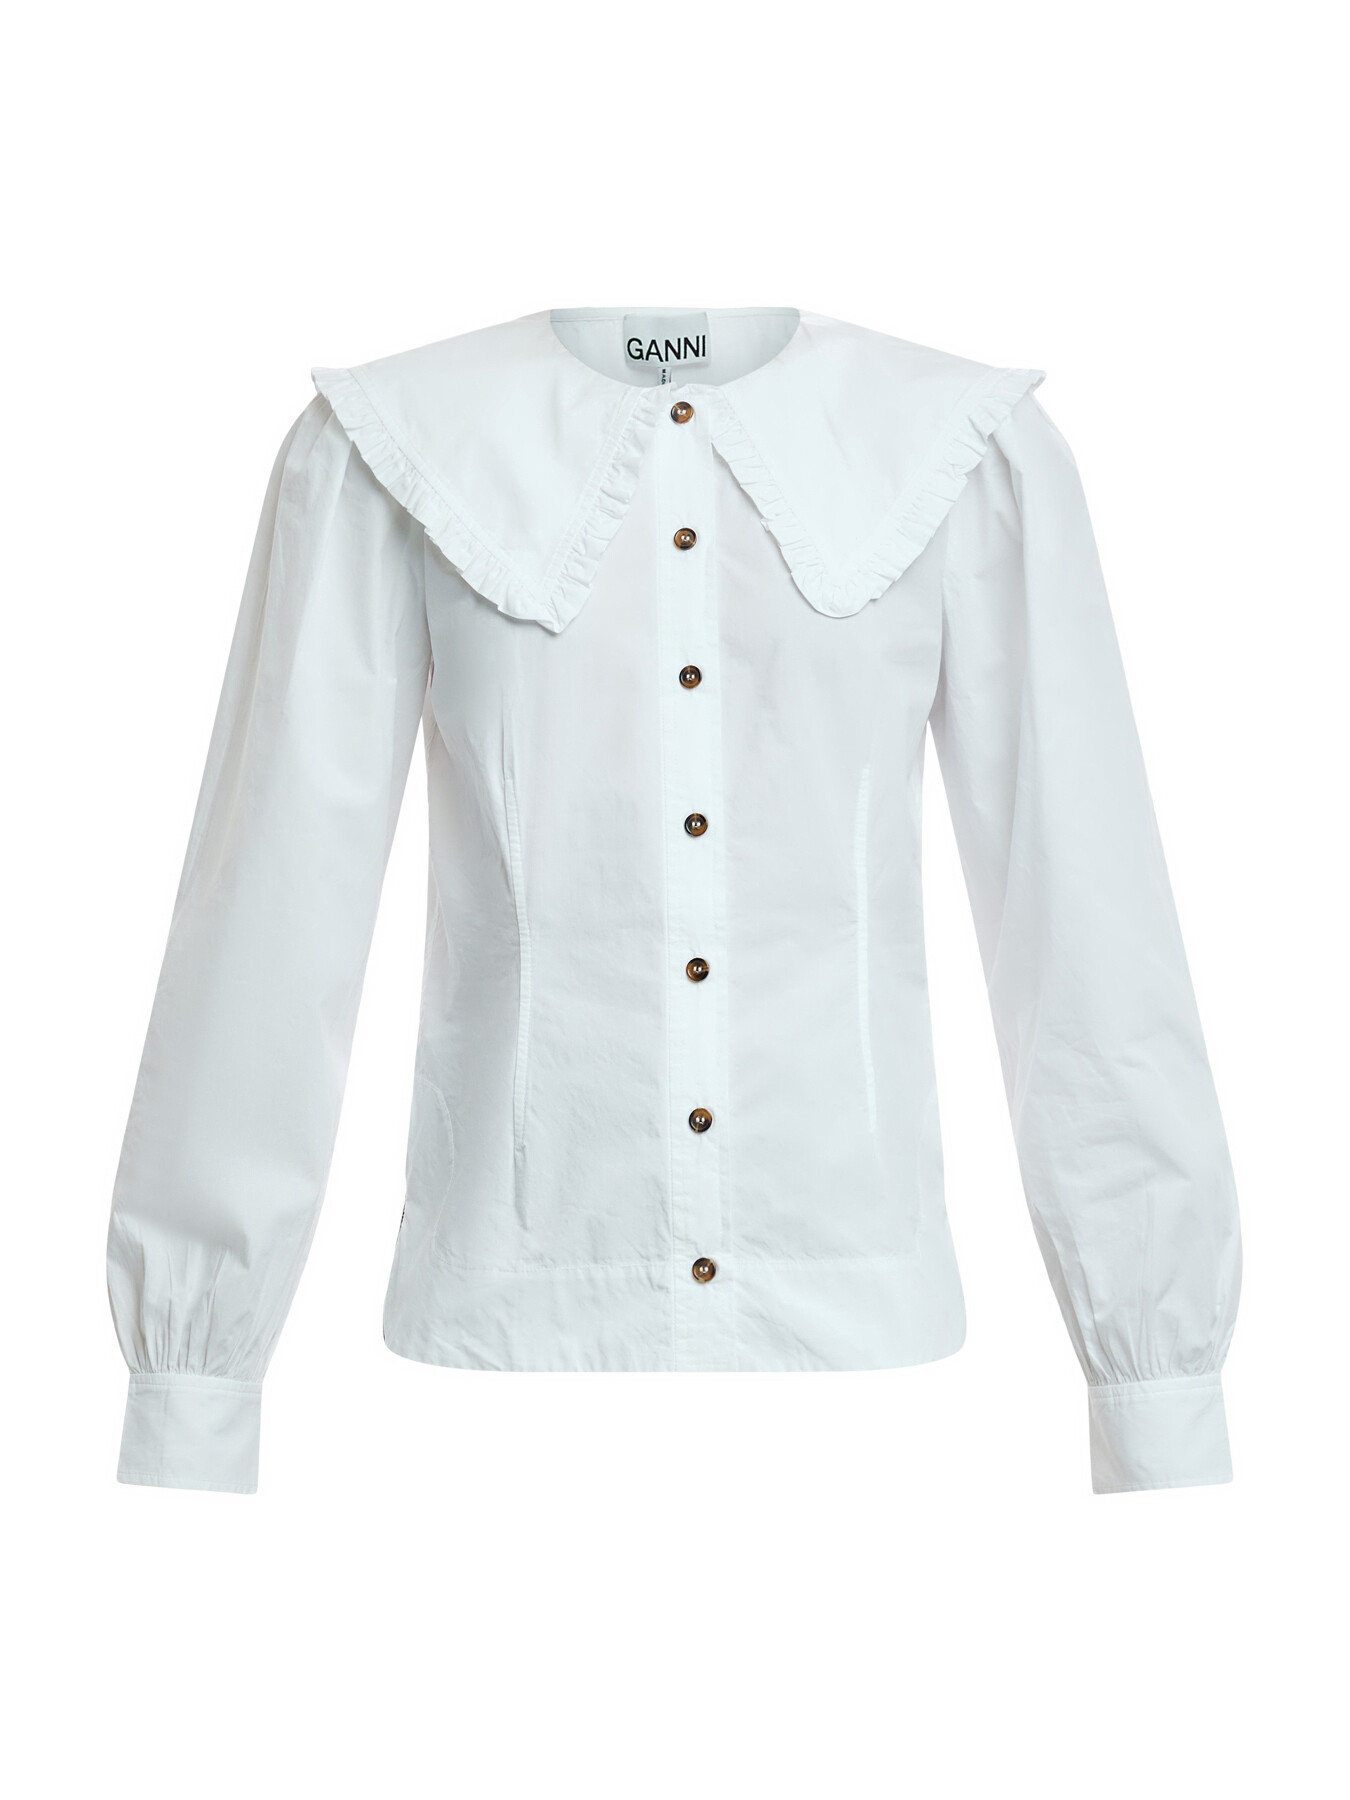 Ganni Women's Cotton Poplin Collared Shirt In White